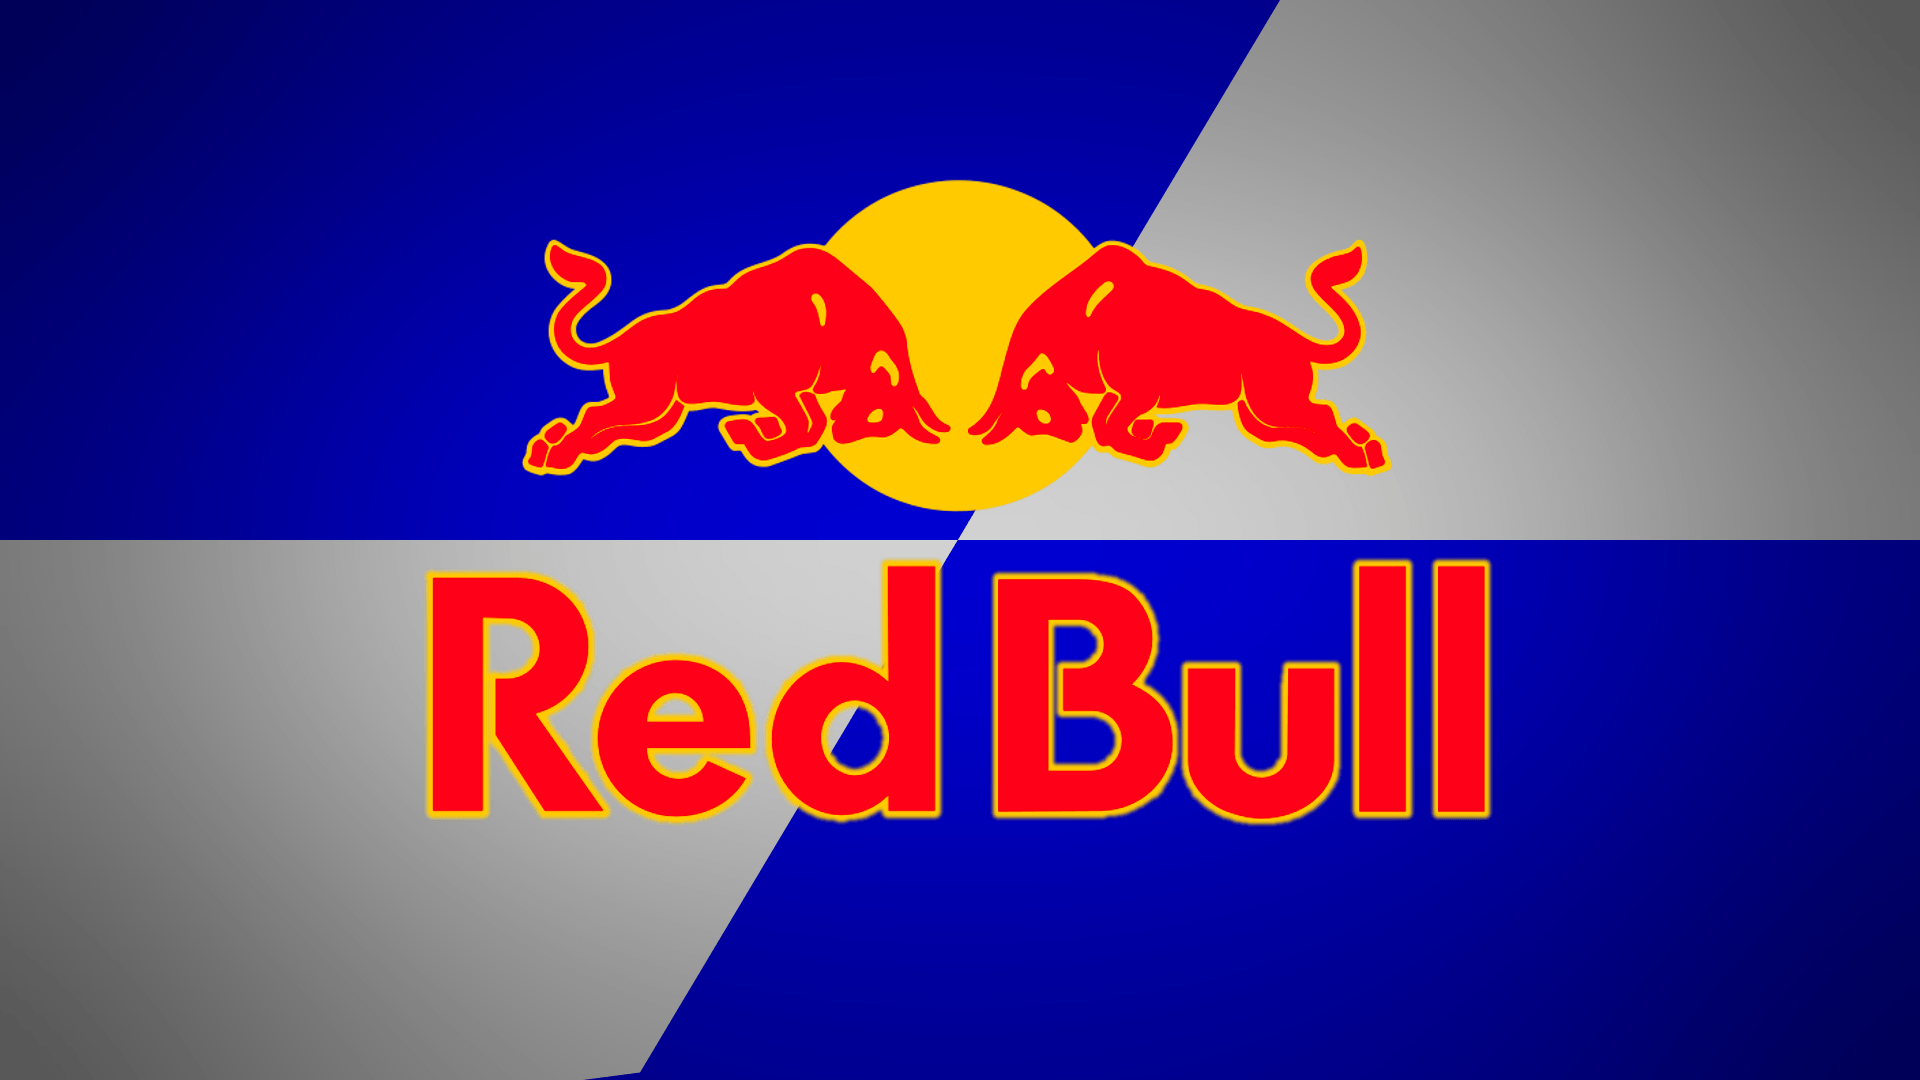 Cool Red Bull Logo - Free Download Red Bull Logo Wallpaper